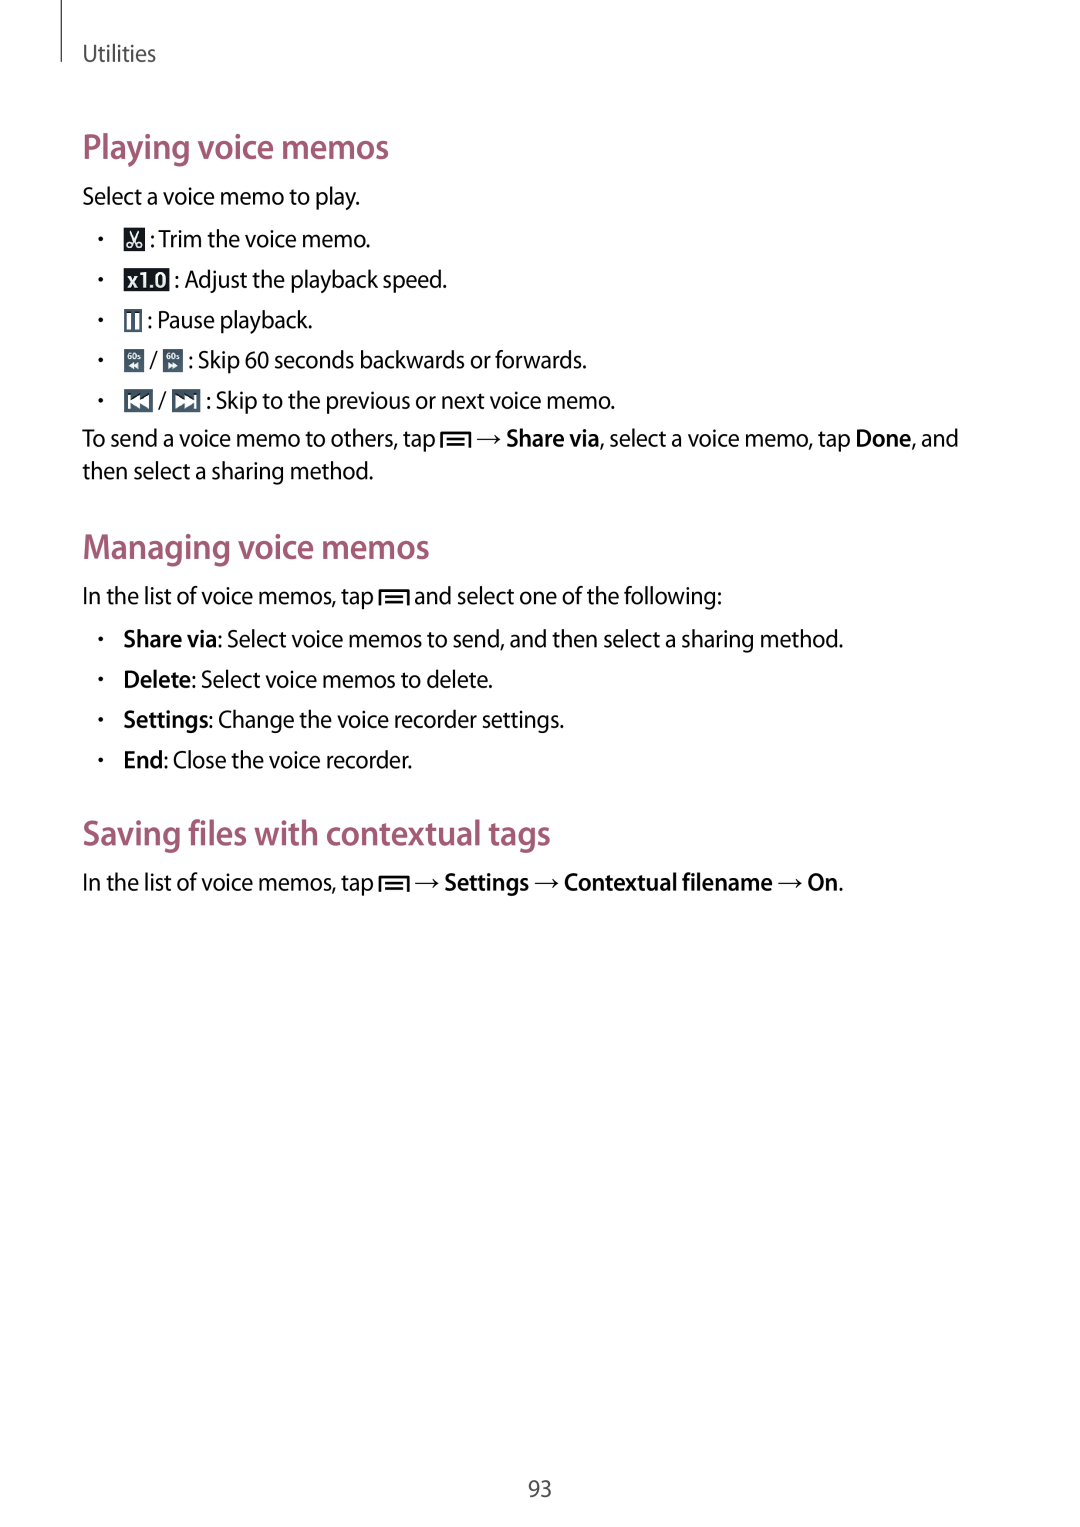 Samsung GT2I9060MKDXEH manual Playing voice memos, Managing voice memos, Saving files with contextual tags, Utilities 